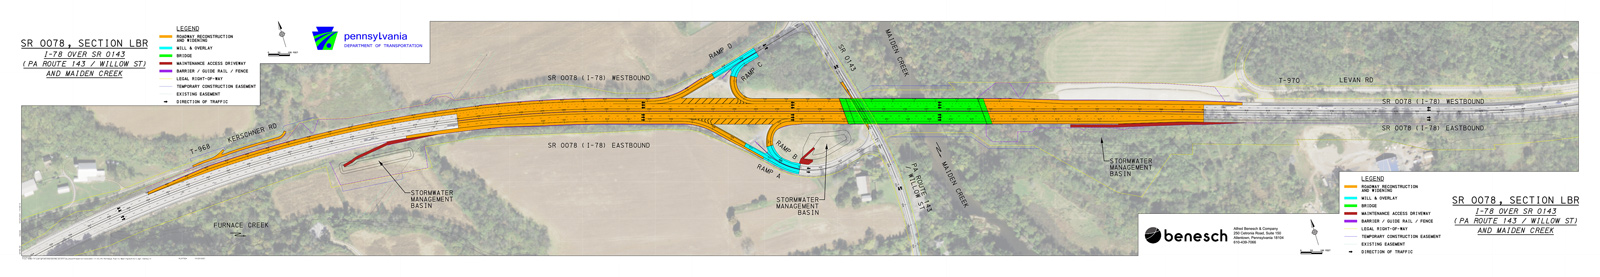 i-78 lenhartsville bridge design plan sheet